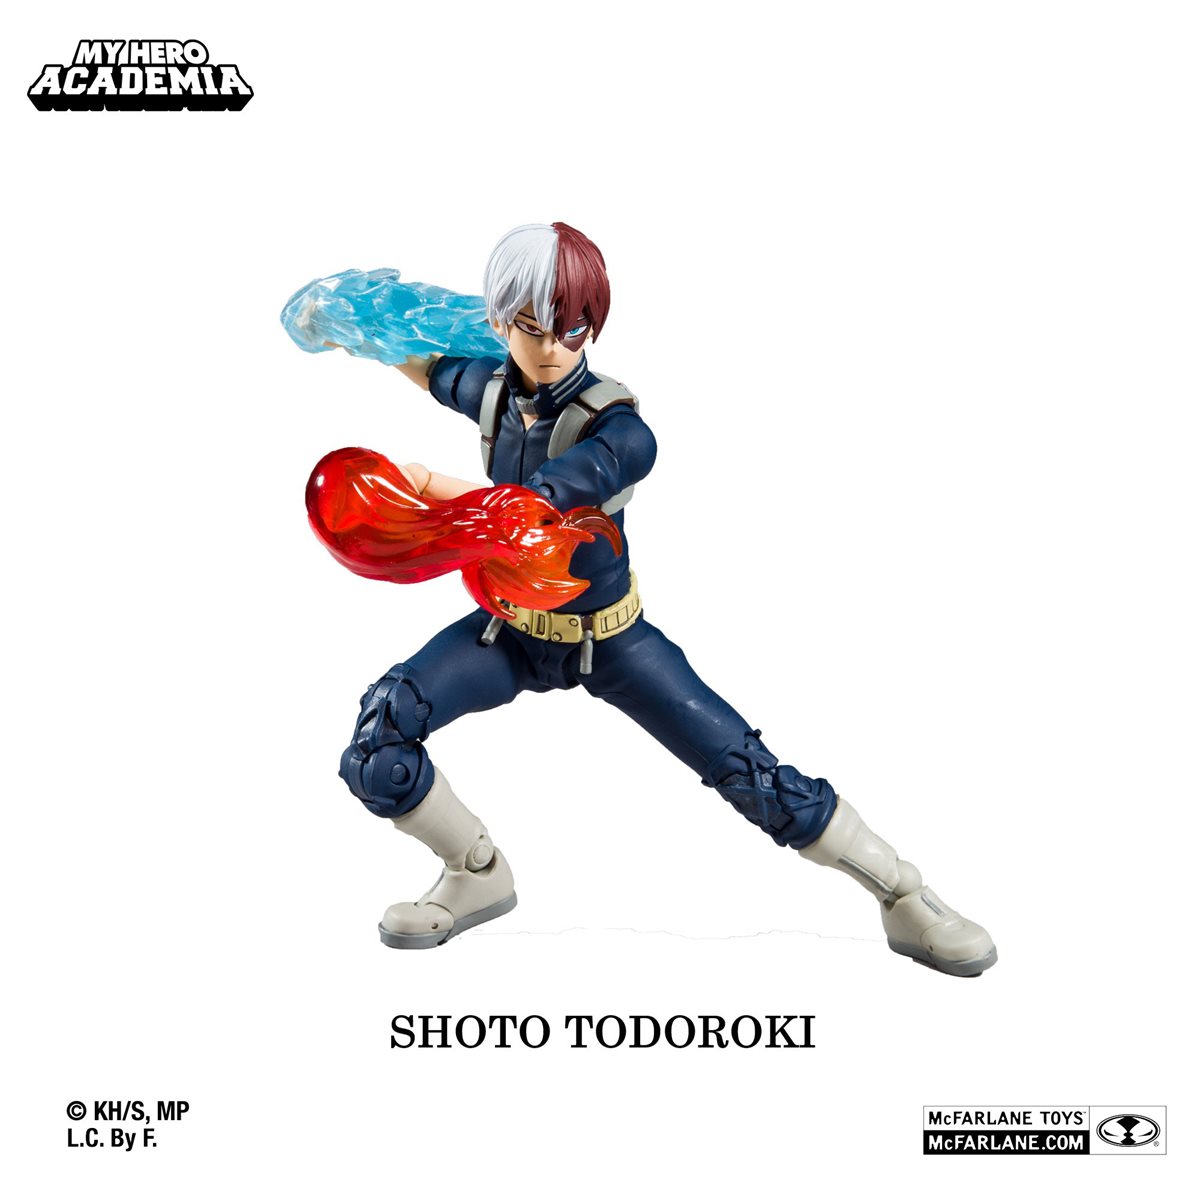 My Hero Academia Series 2 Shoto Todoroki 7 Inch Action Figure